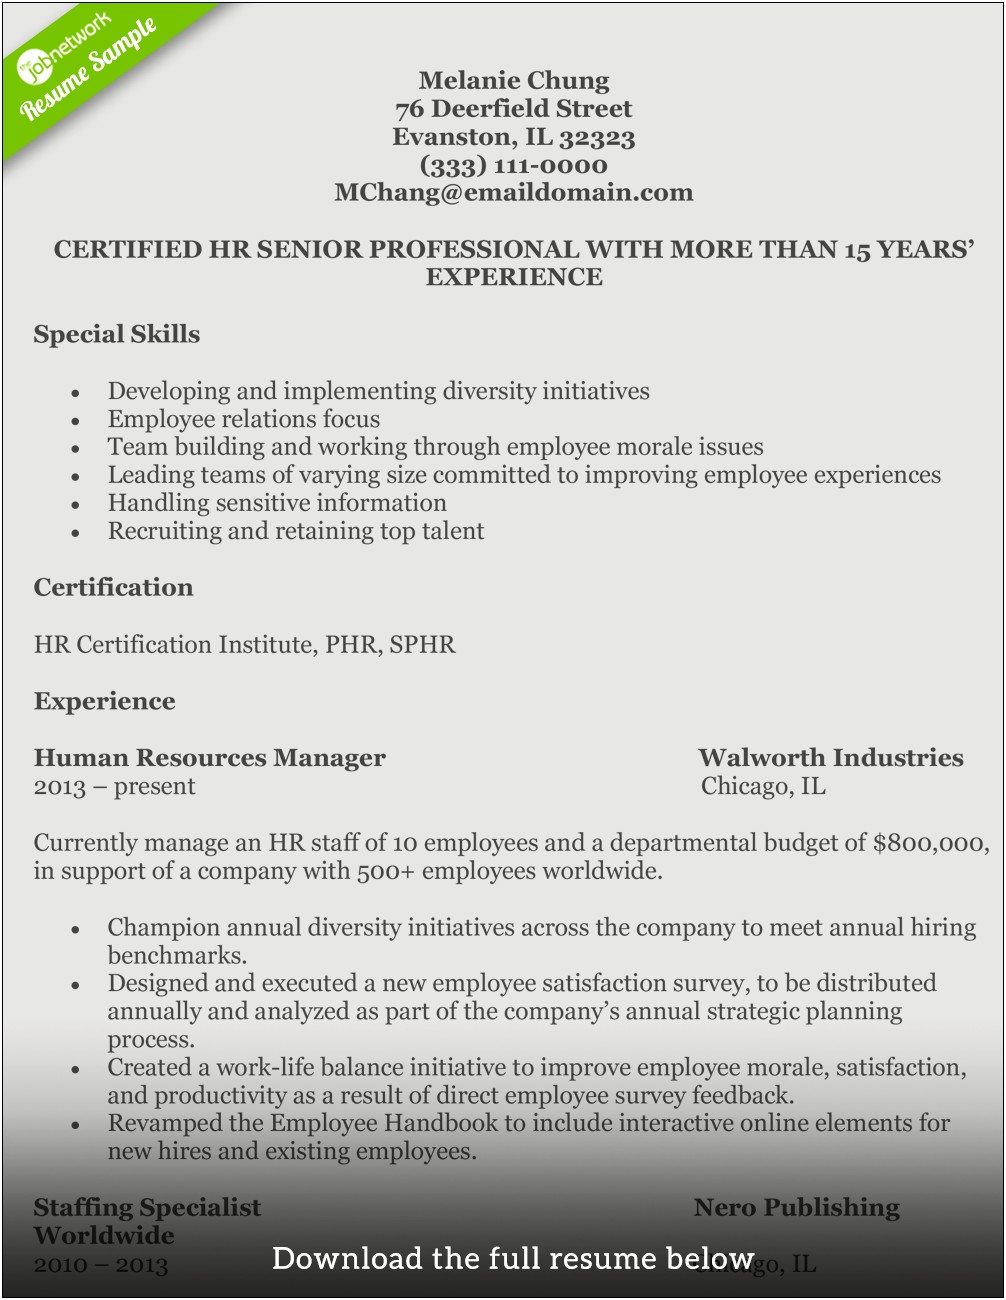 Hr Assistant Job Description Sample Resume